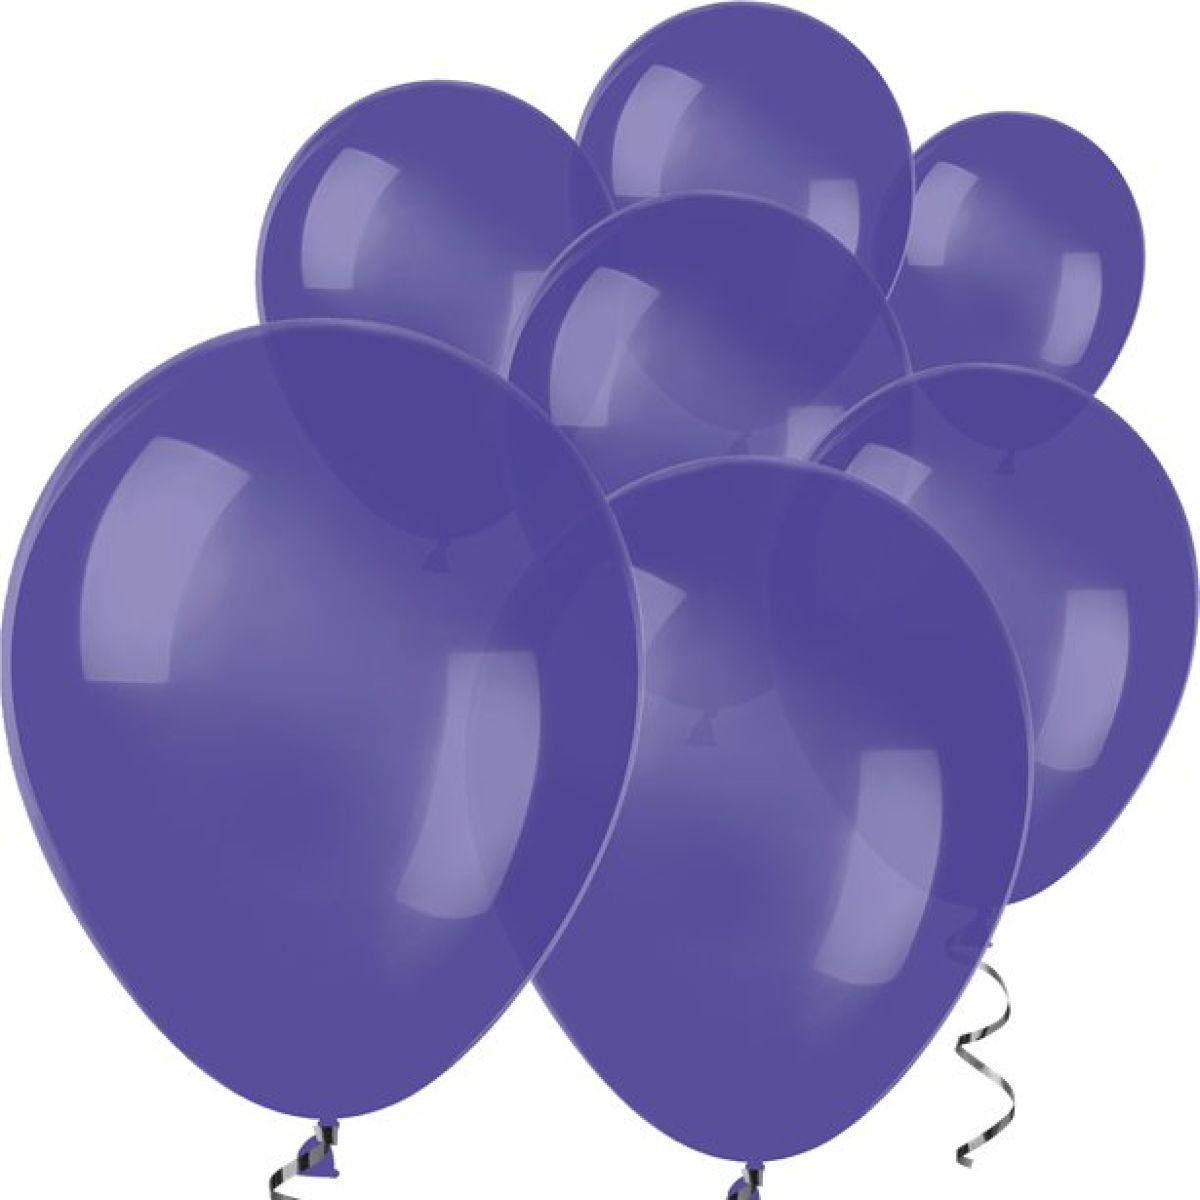 Violet Mini Balloons - 5" Latex Balloons